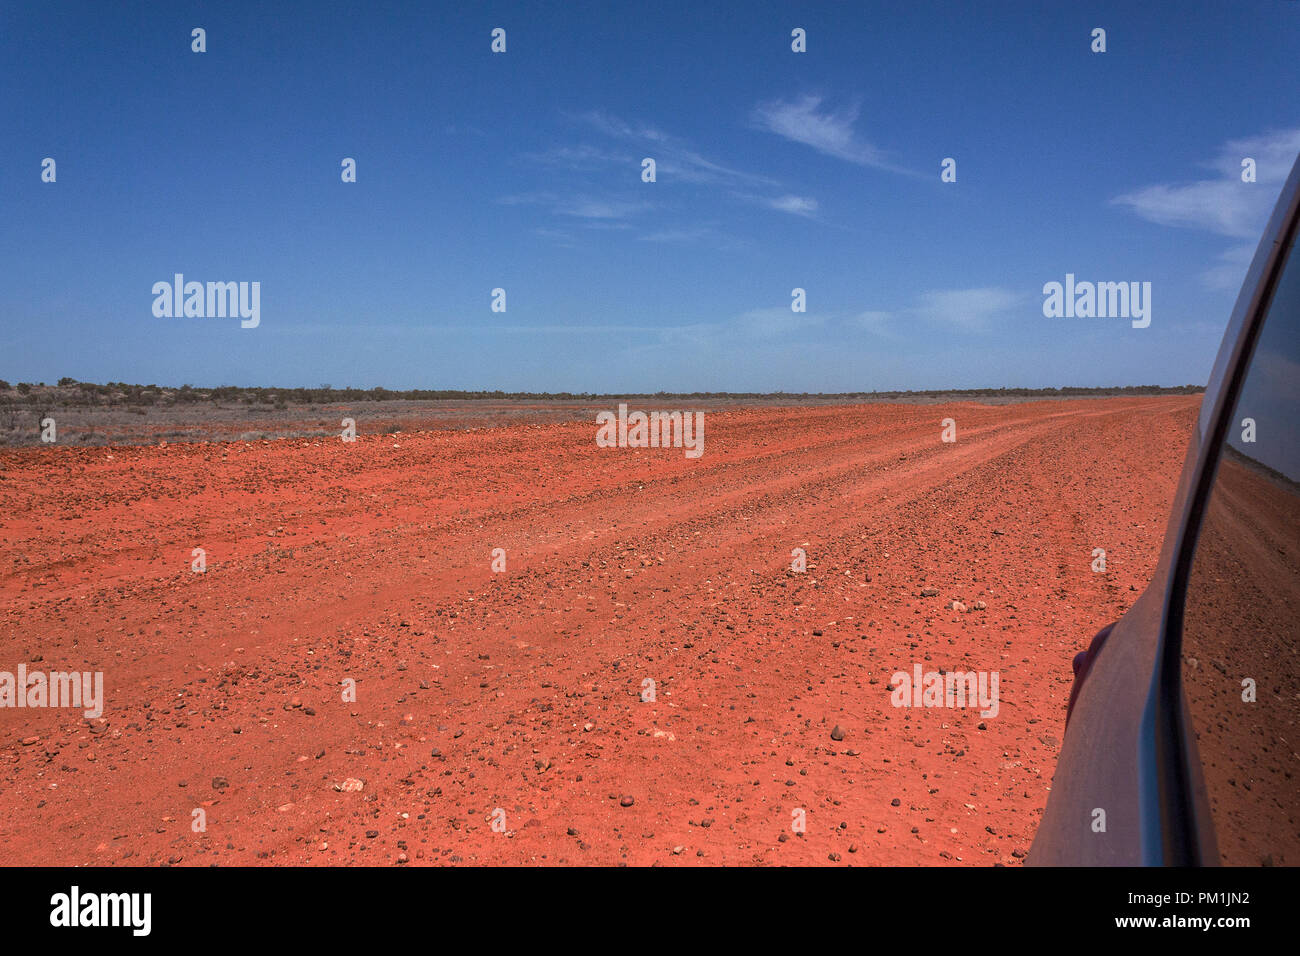 4WD Off-Road-van auf roter Erde Outback Australien Stockfoto